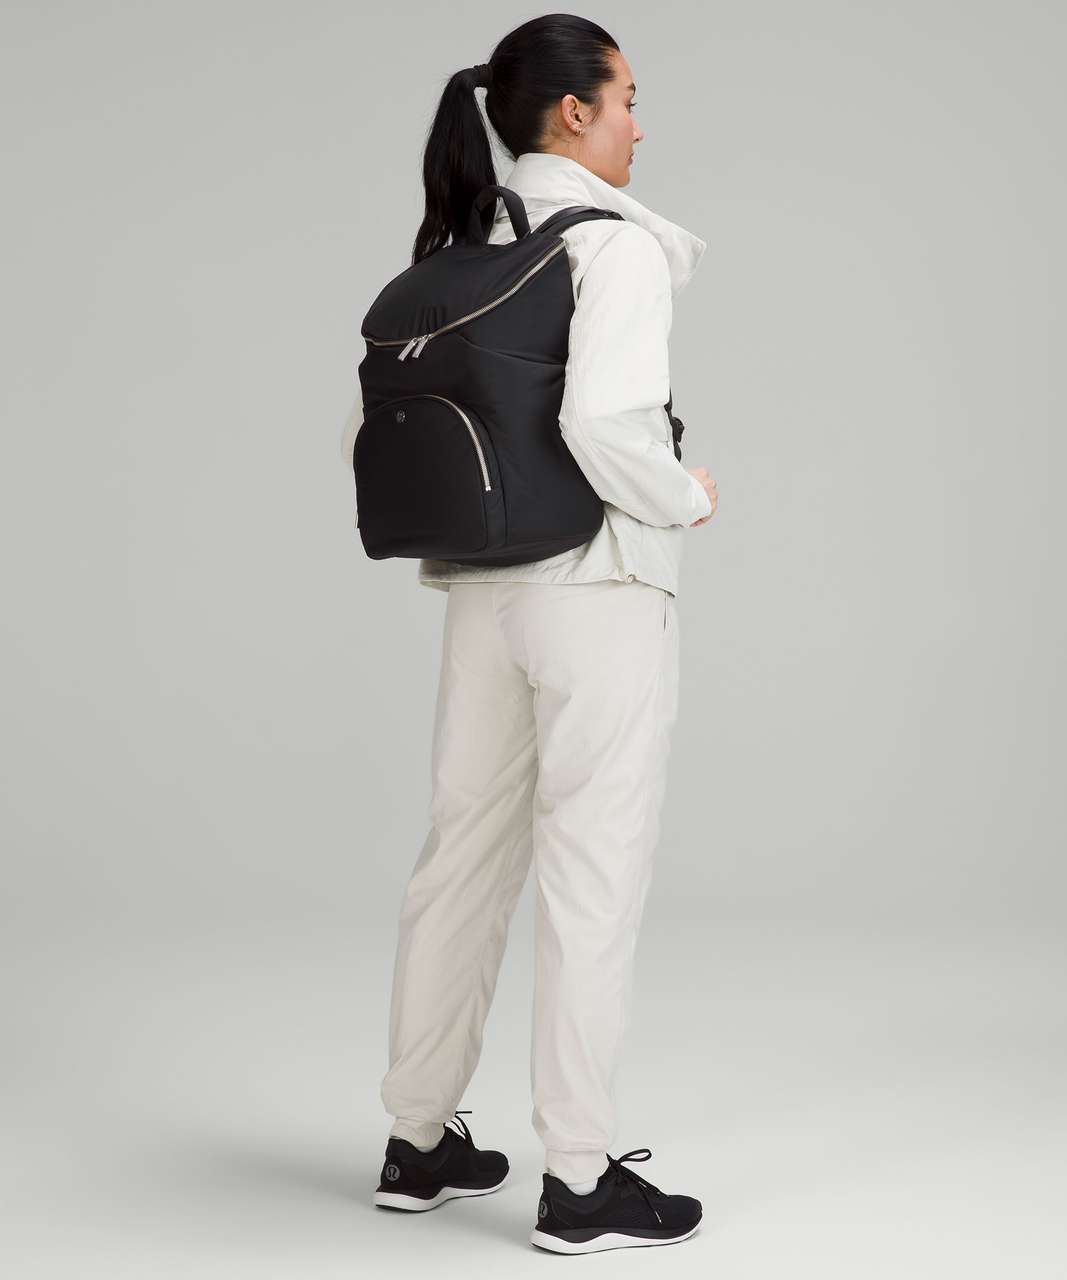 Lululemon New Parent Backpack 17L - Black / Silver Drop (First Release)